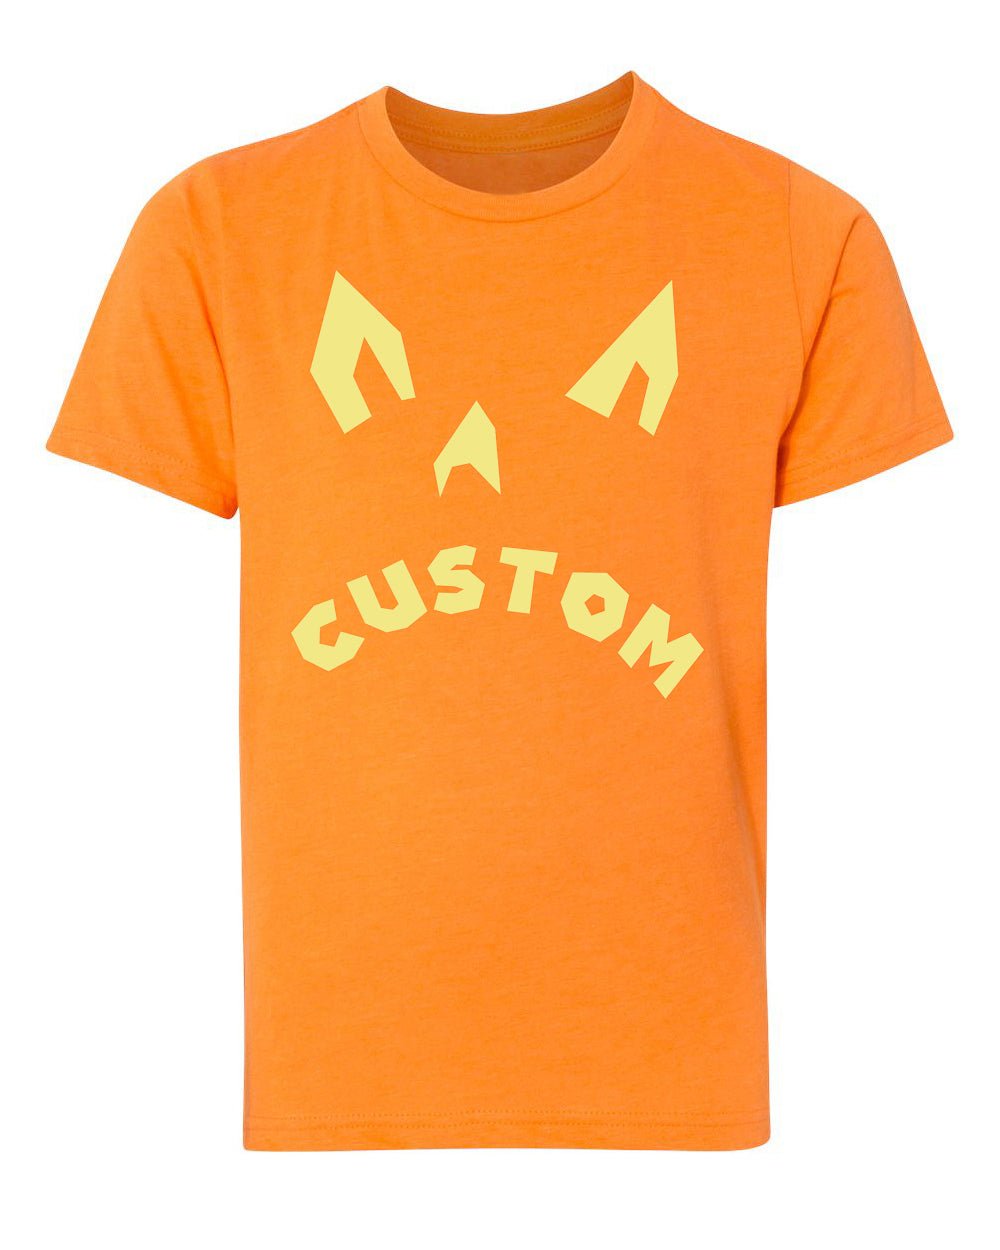 Angry Jack o Lantern Custom Kids Halloween T Shirts - Mato & Hash